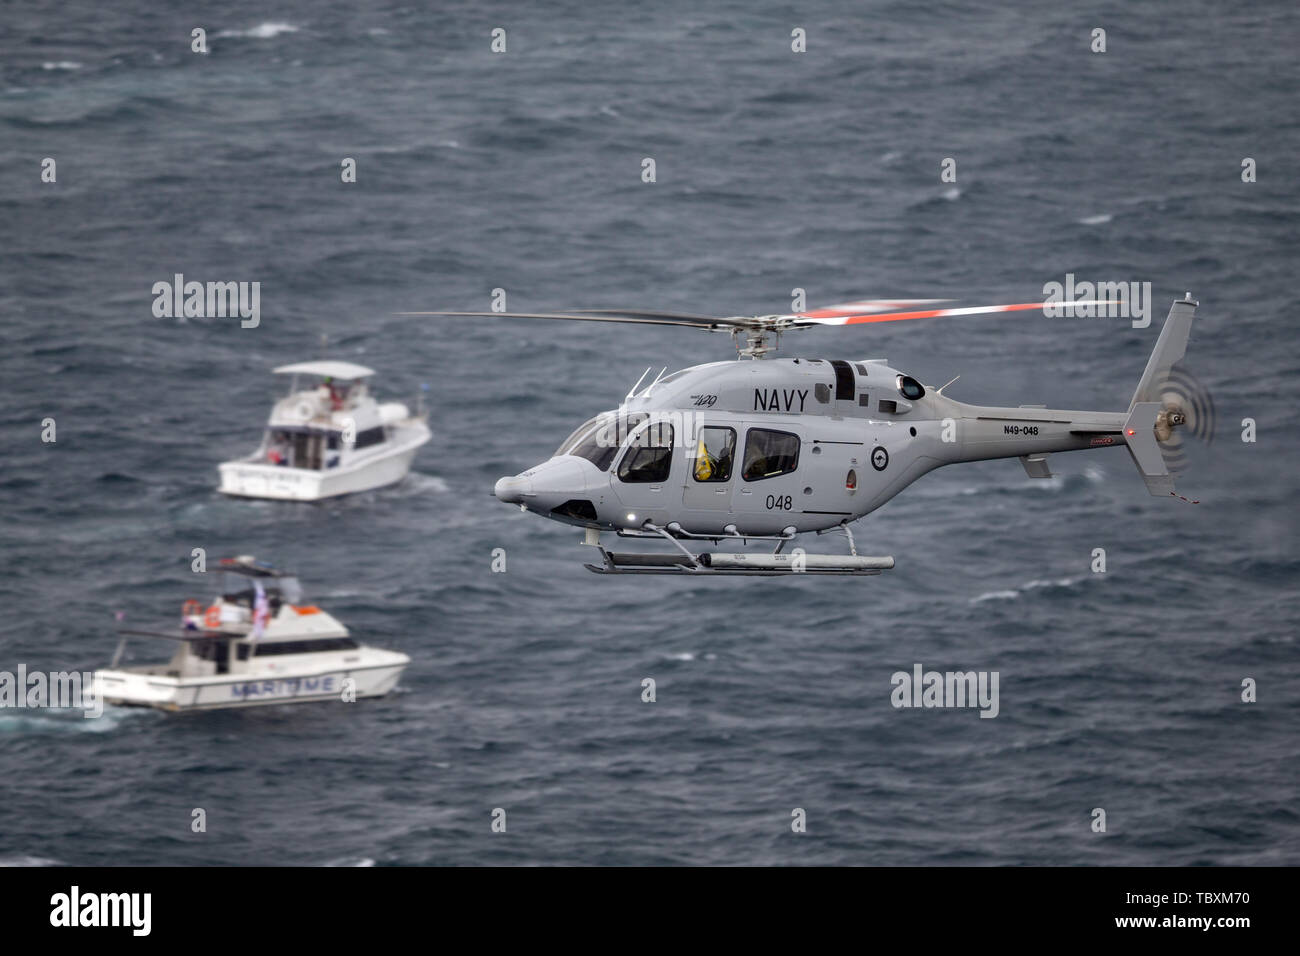 Royal Australian Navy (RAN) Bell 429 Helicopter N49-048 flying over Sydney Harbour. Stock Photo